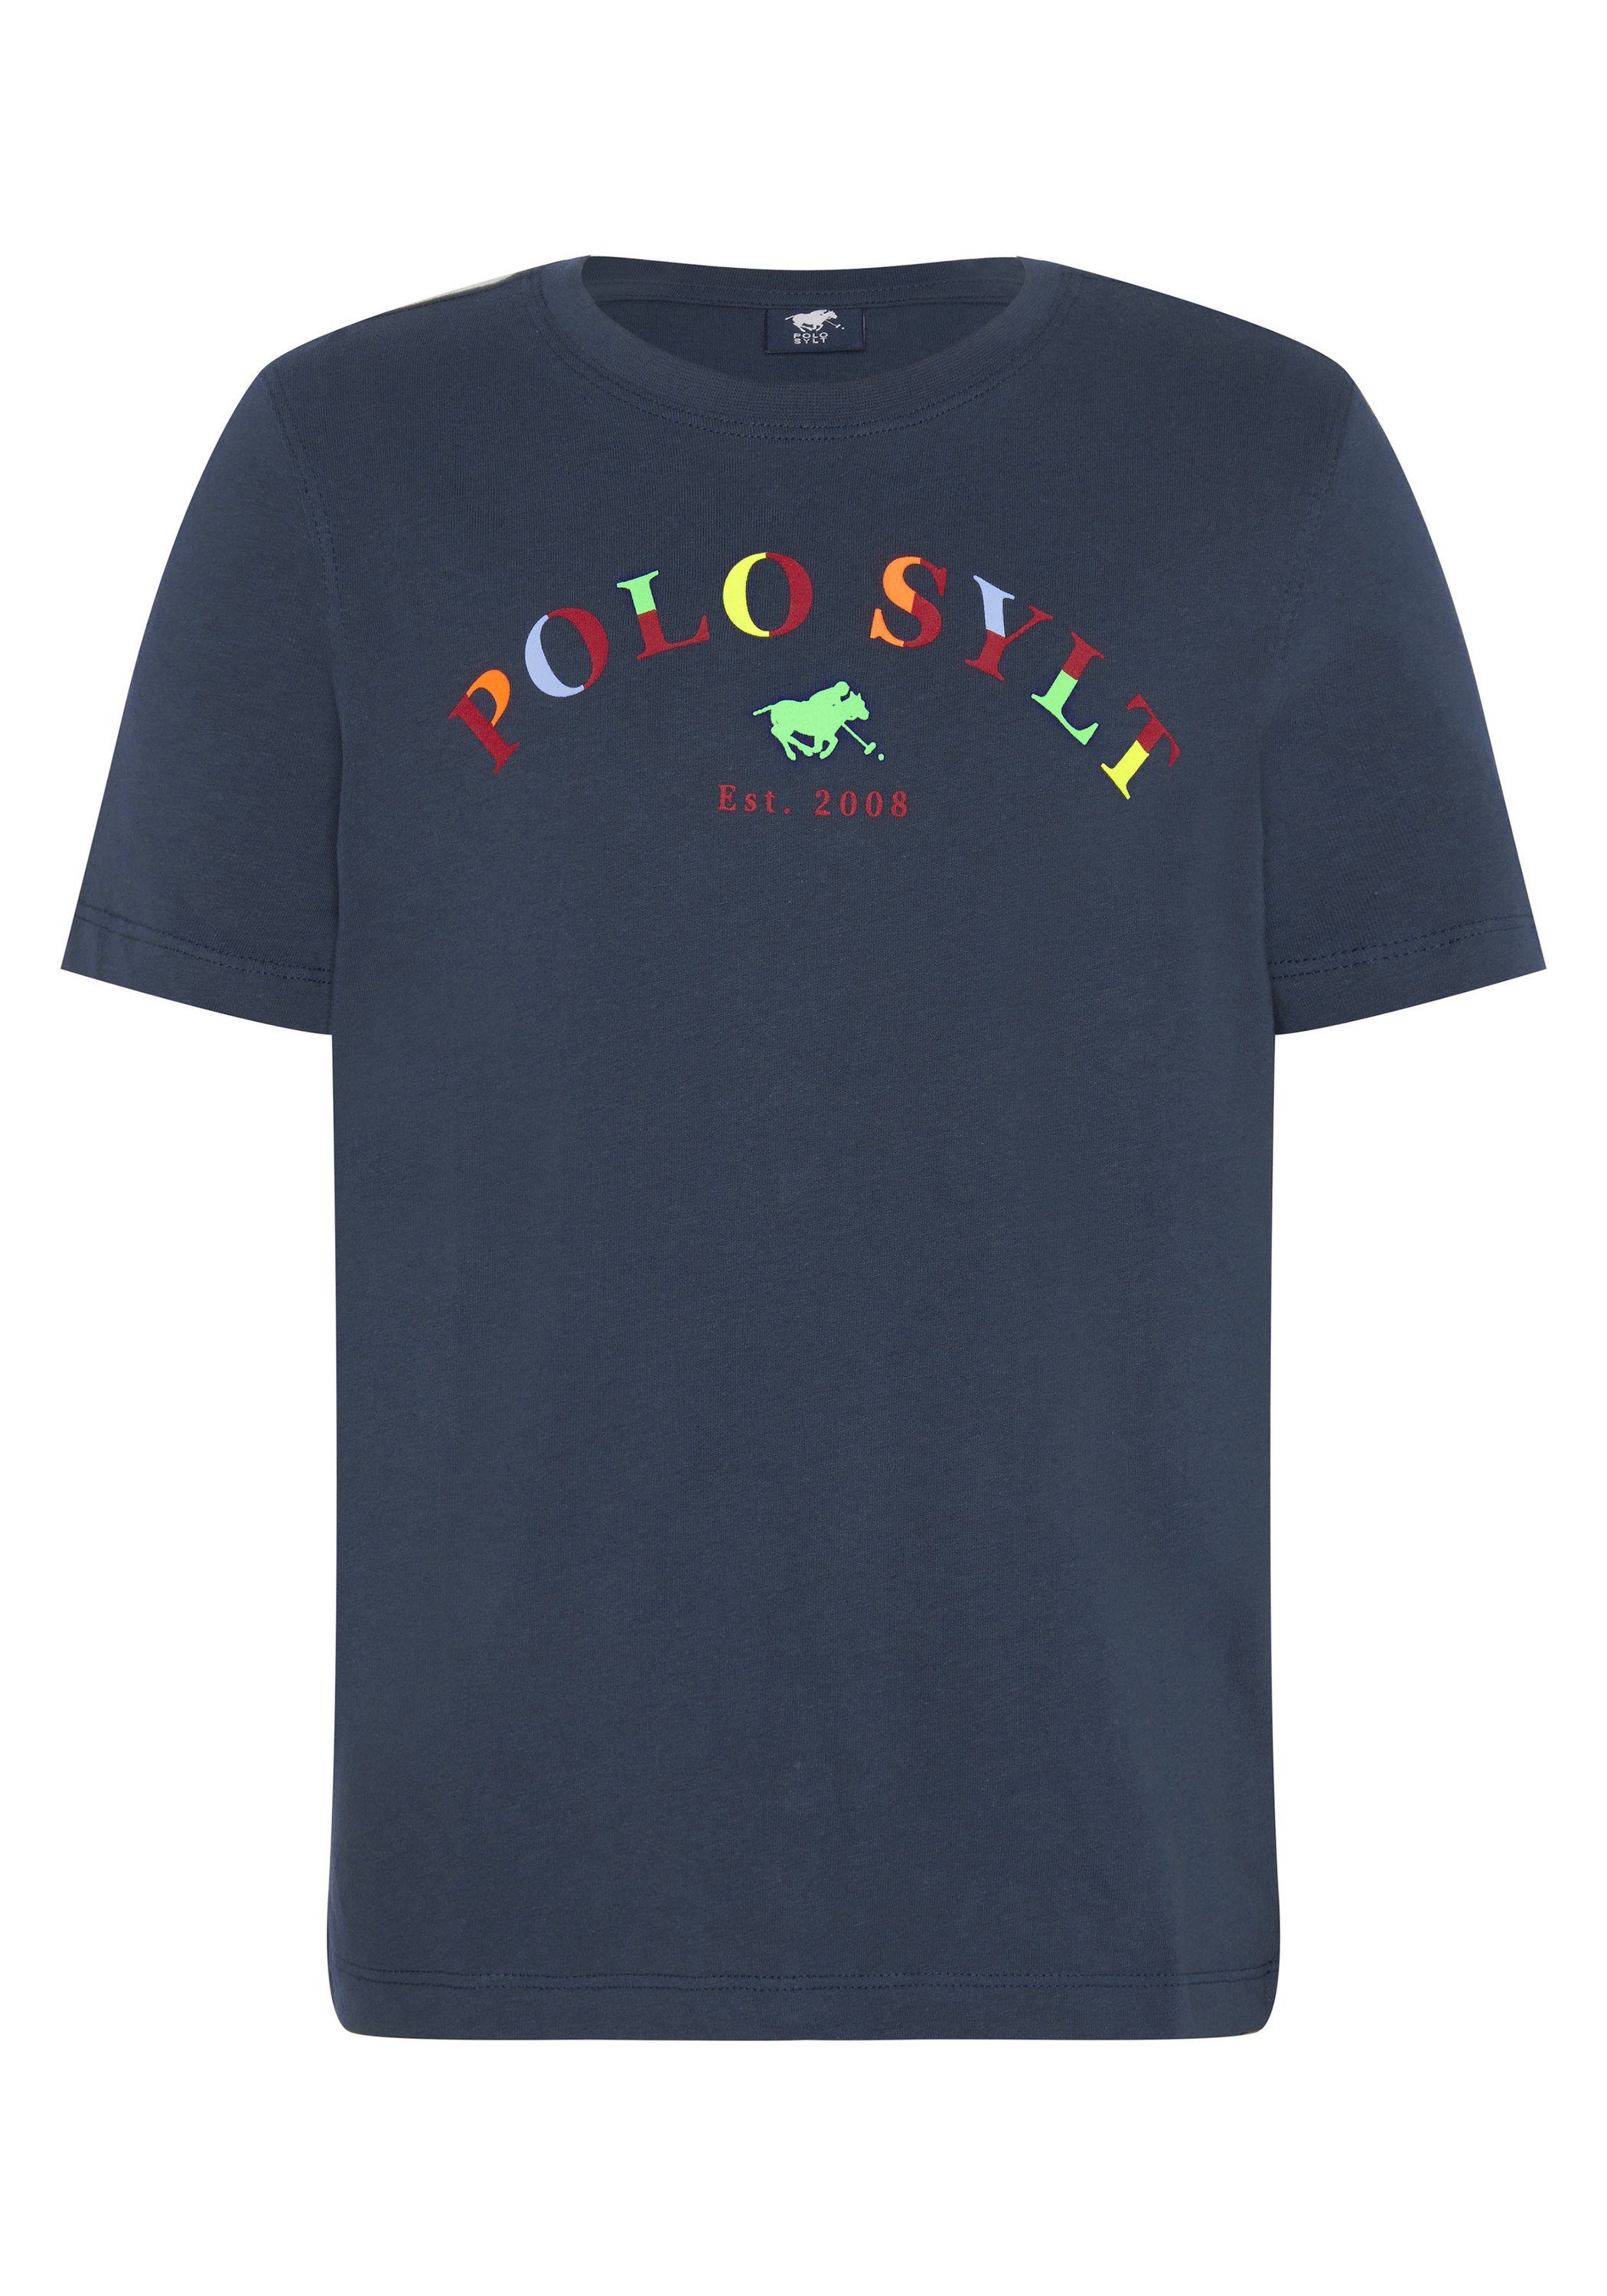 Polo Sylt Print-Shirt mit Logo-Print